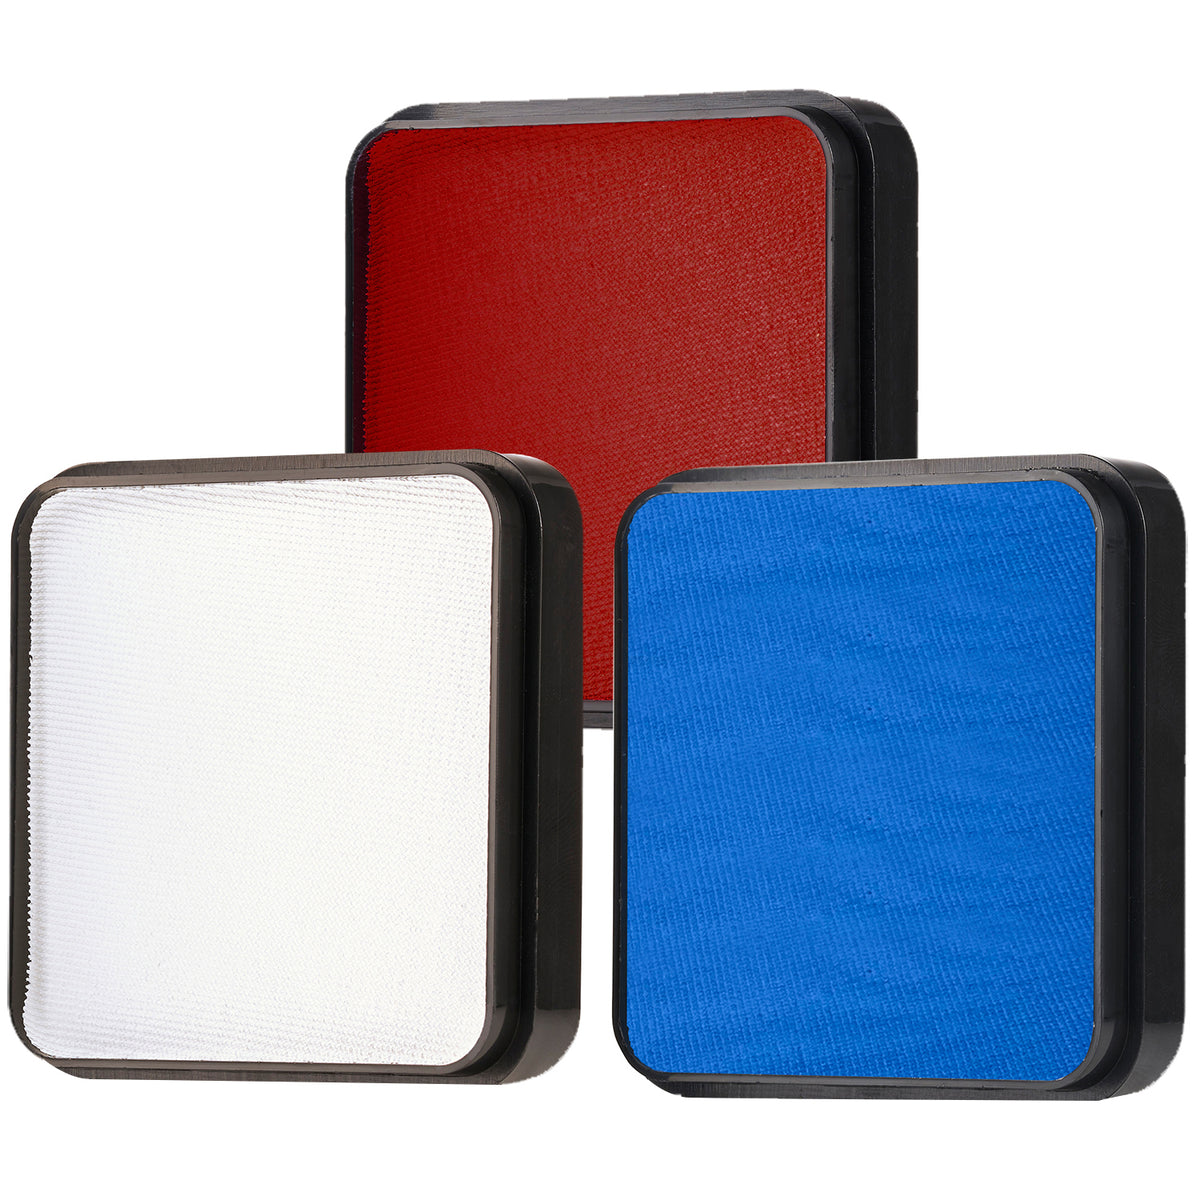 Kraze FX Face Paints - Red, White &amp; Blue Value Pack (25 gm each)